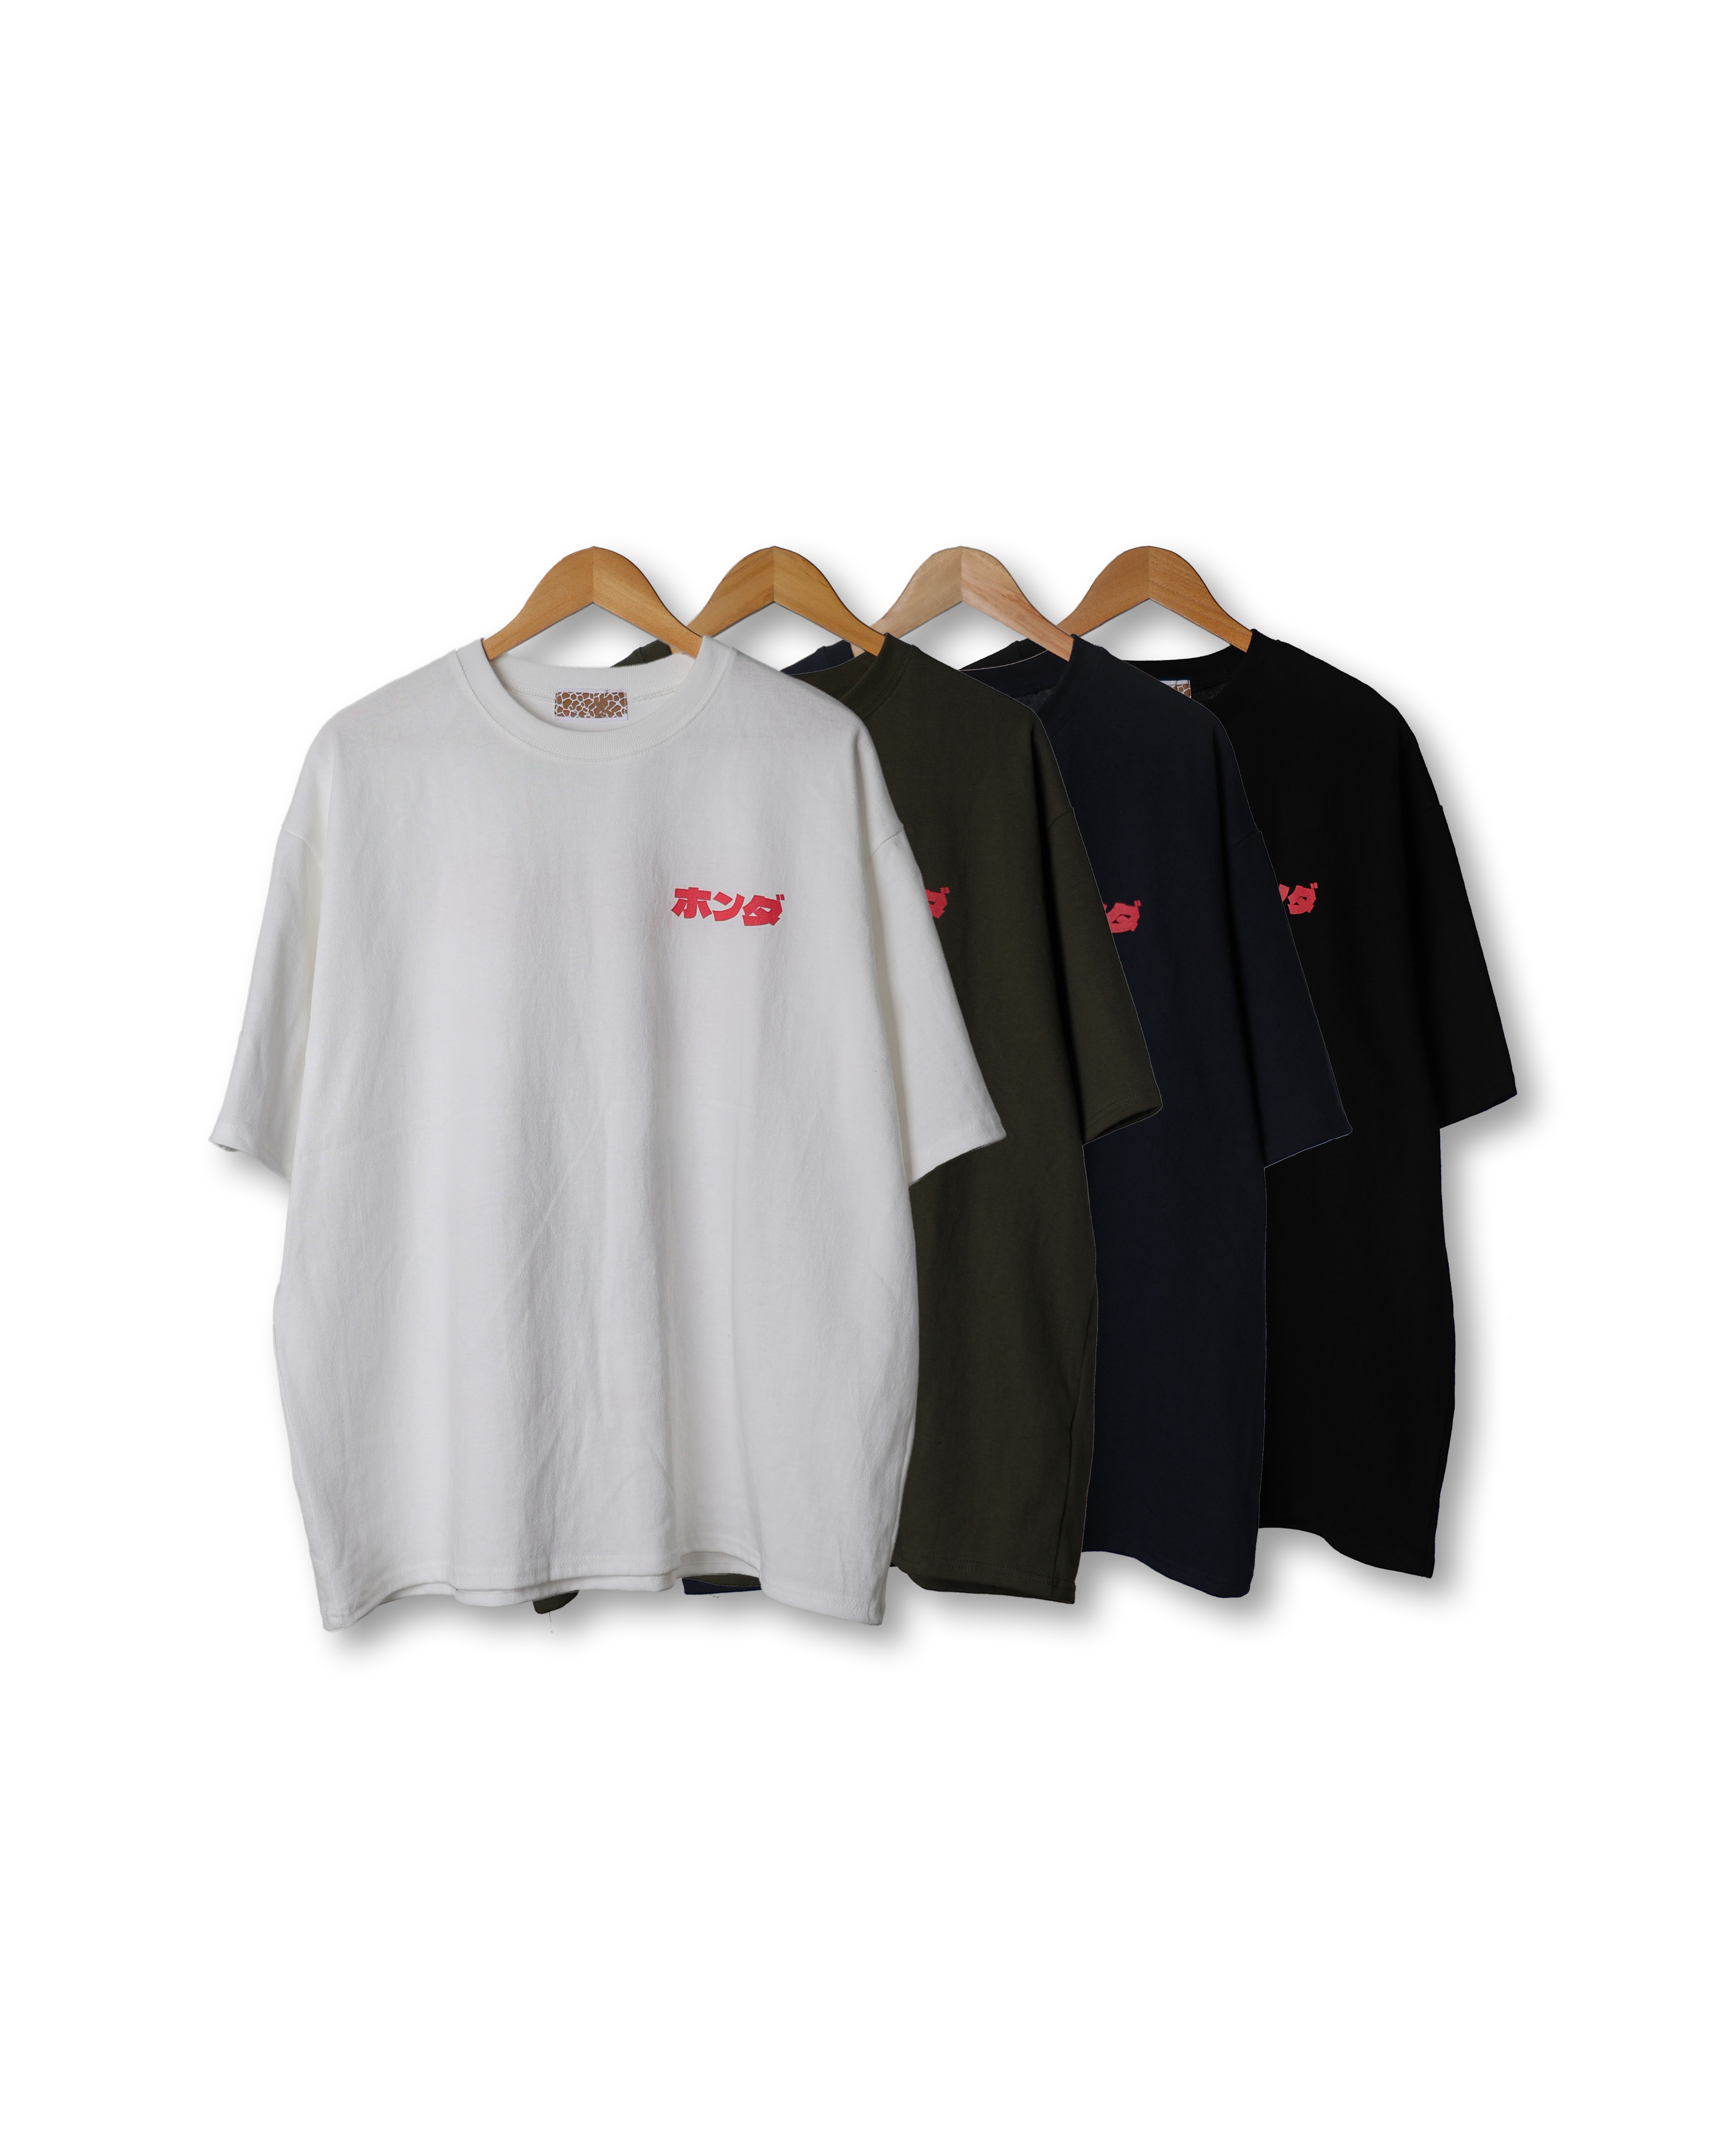 KIRI Hiragana Over Printed T Shirts (Black/Navy/Olive/Ivory) - 14차 리오더 (네이비 5/30 , 아이보리 6/3 배송예정)